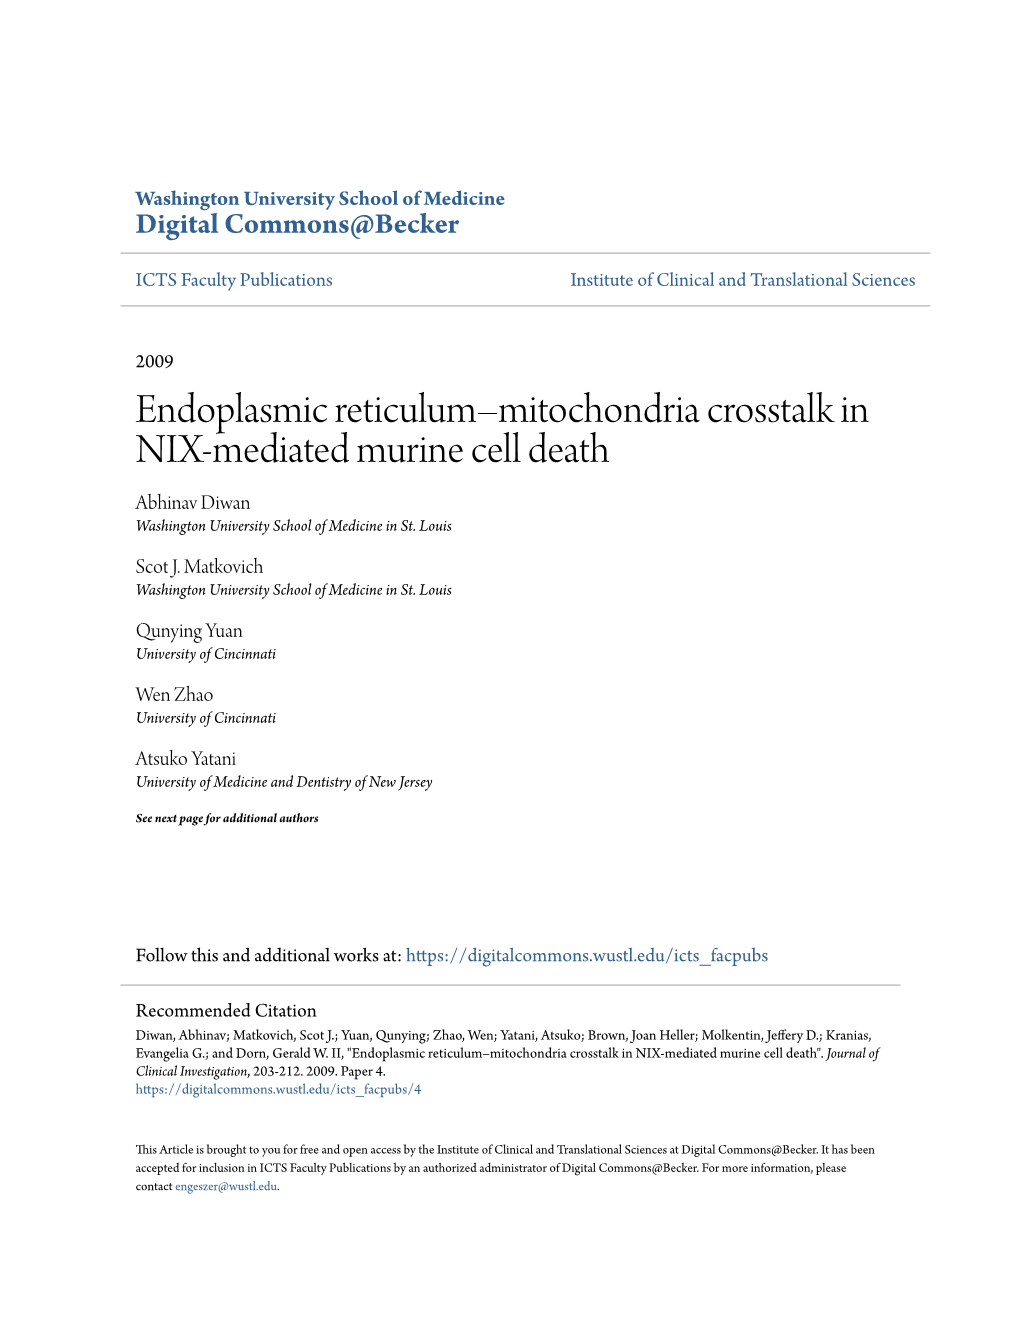 Endoplasmic Reticulum–Mitochondria Crosstalk in NIX-Mediated Murine Cell Death Abhinav Diwan Washington University School of Medicine in St